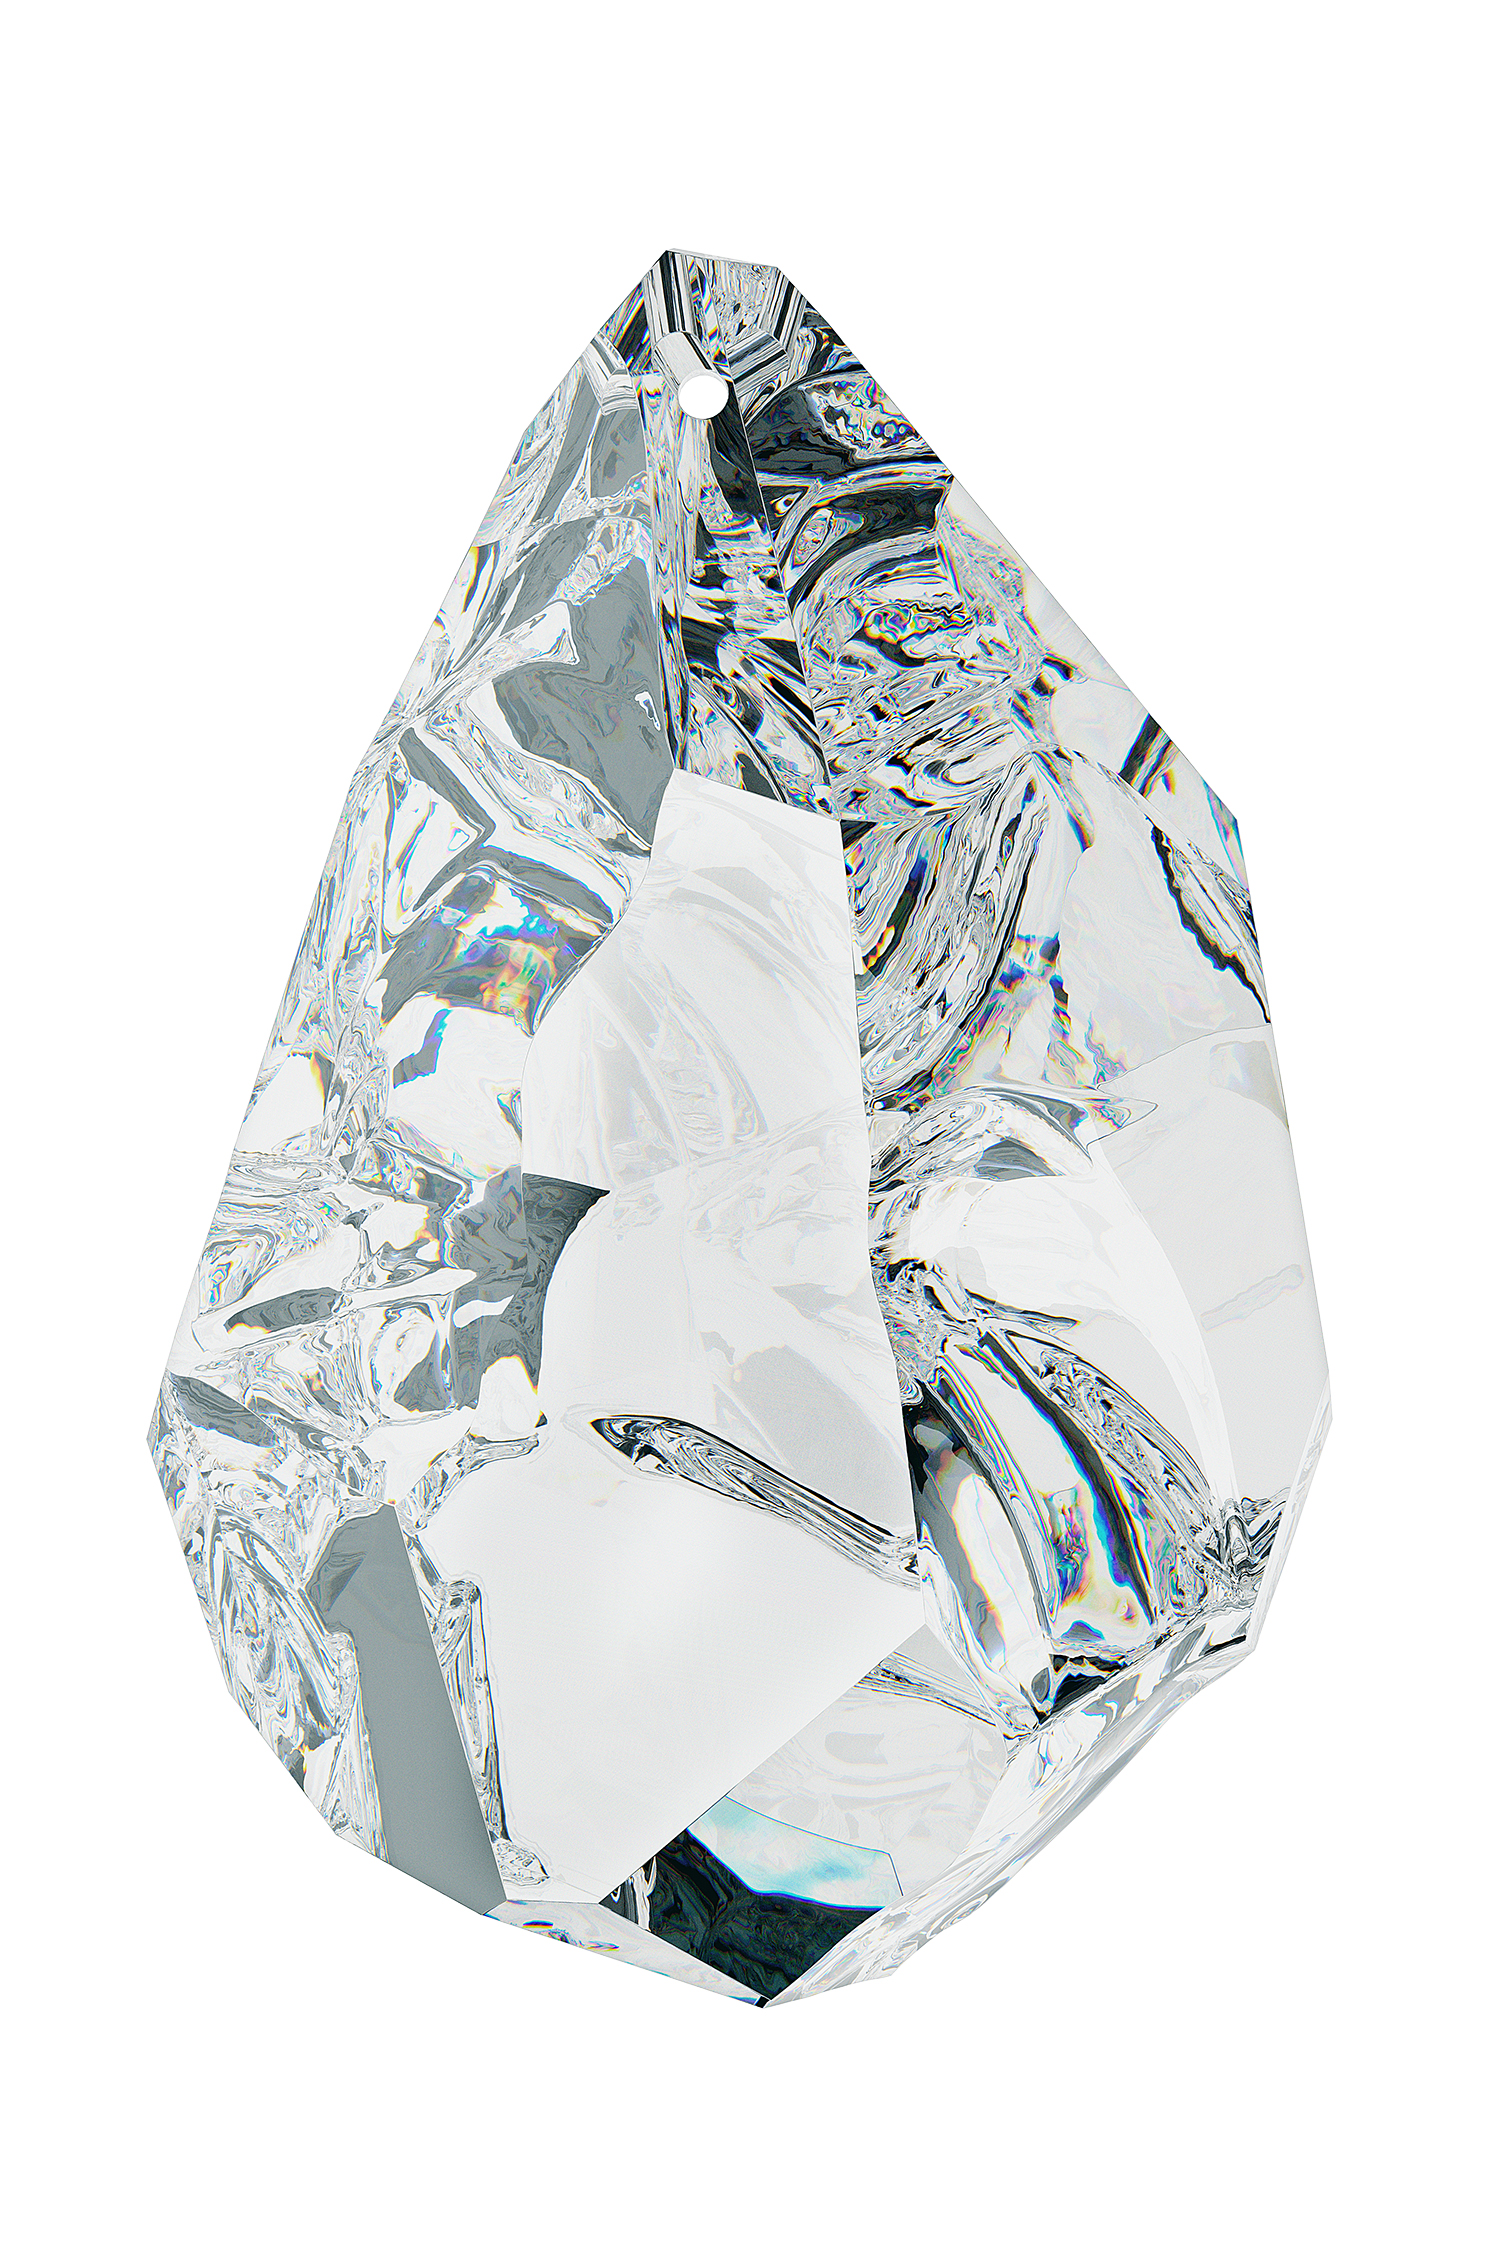 Glaciarium Crystal Shard B